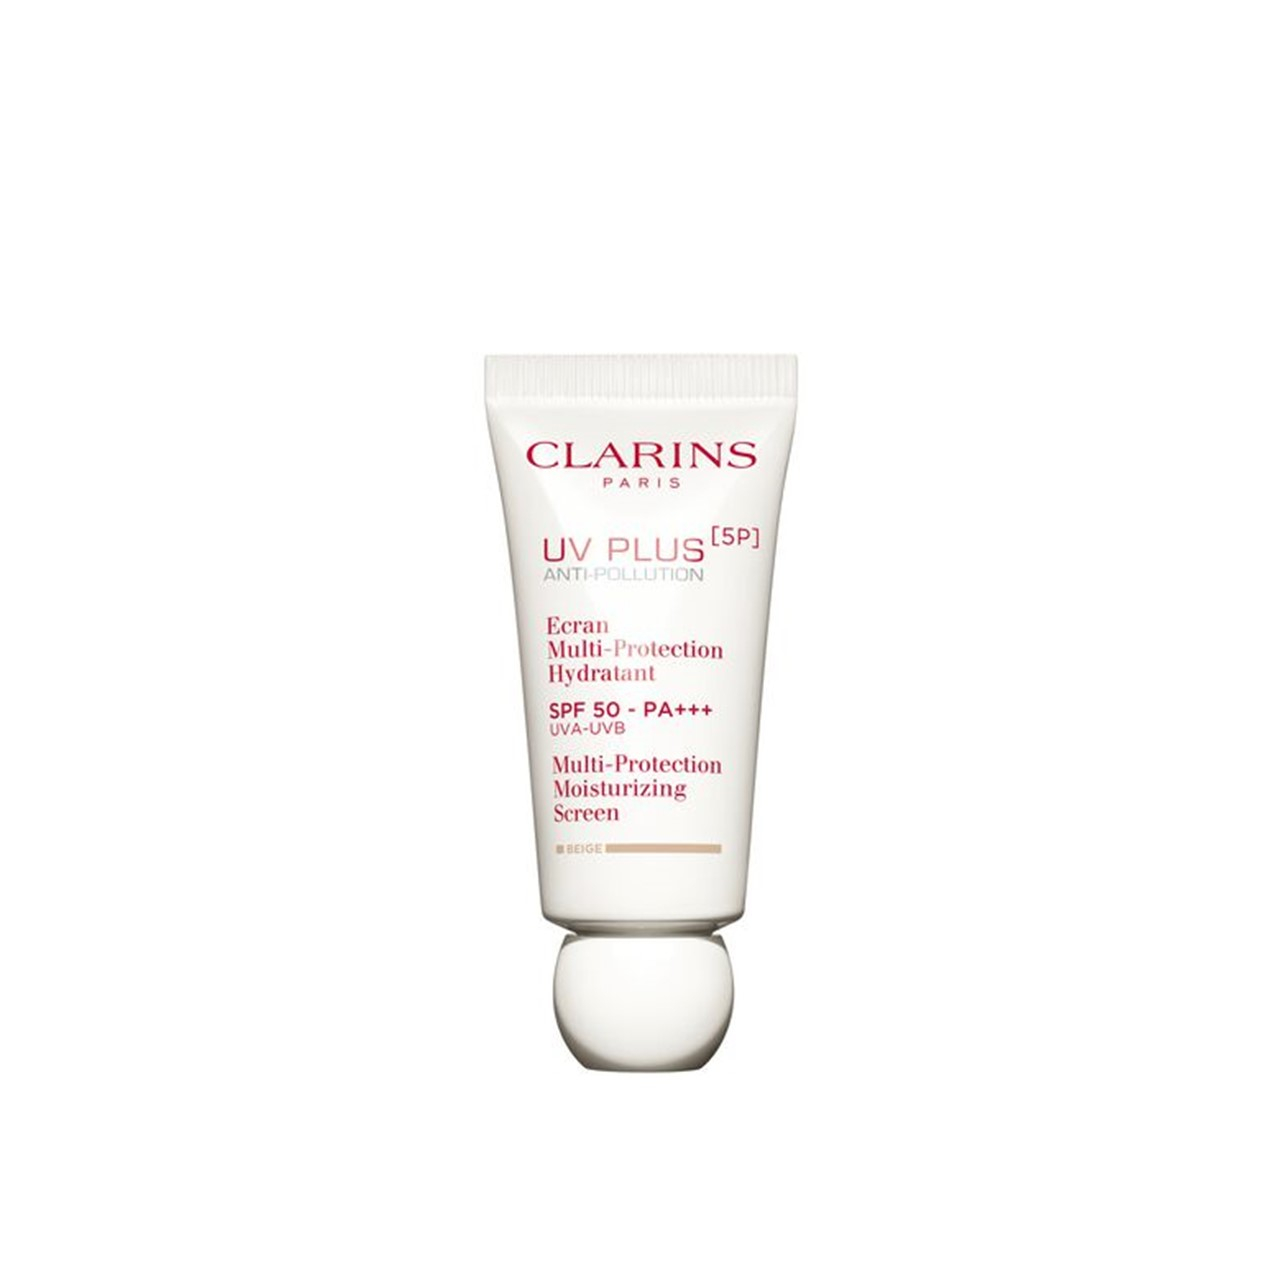 Clarins UV Plus [5P] Anti-Pollution SPF50 Beige 30ml (1.01fl oz)